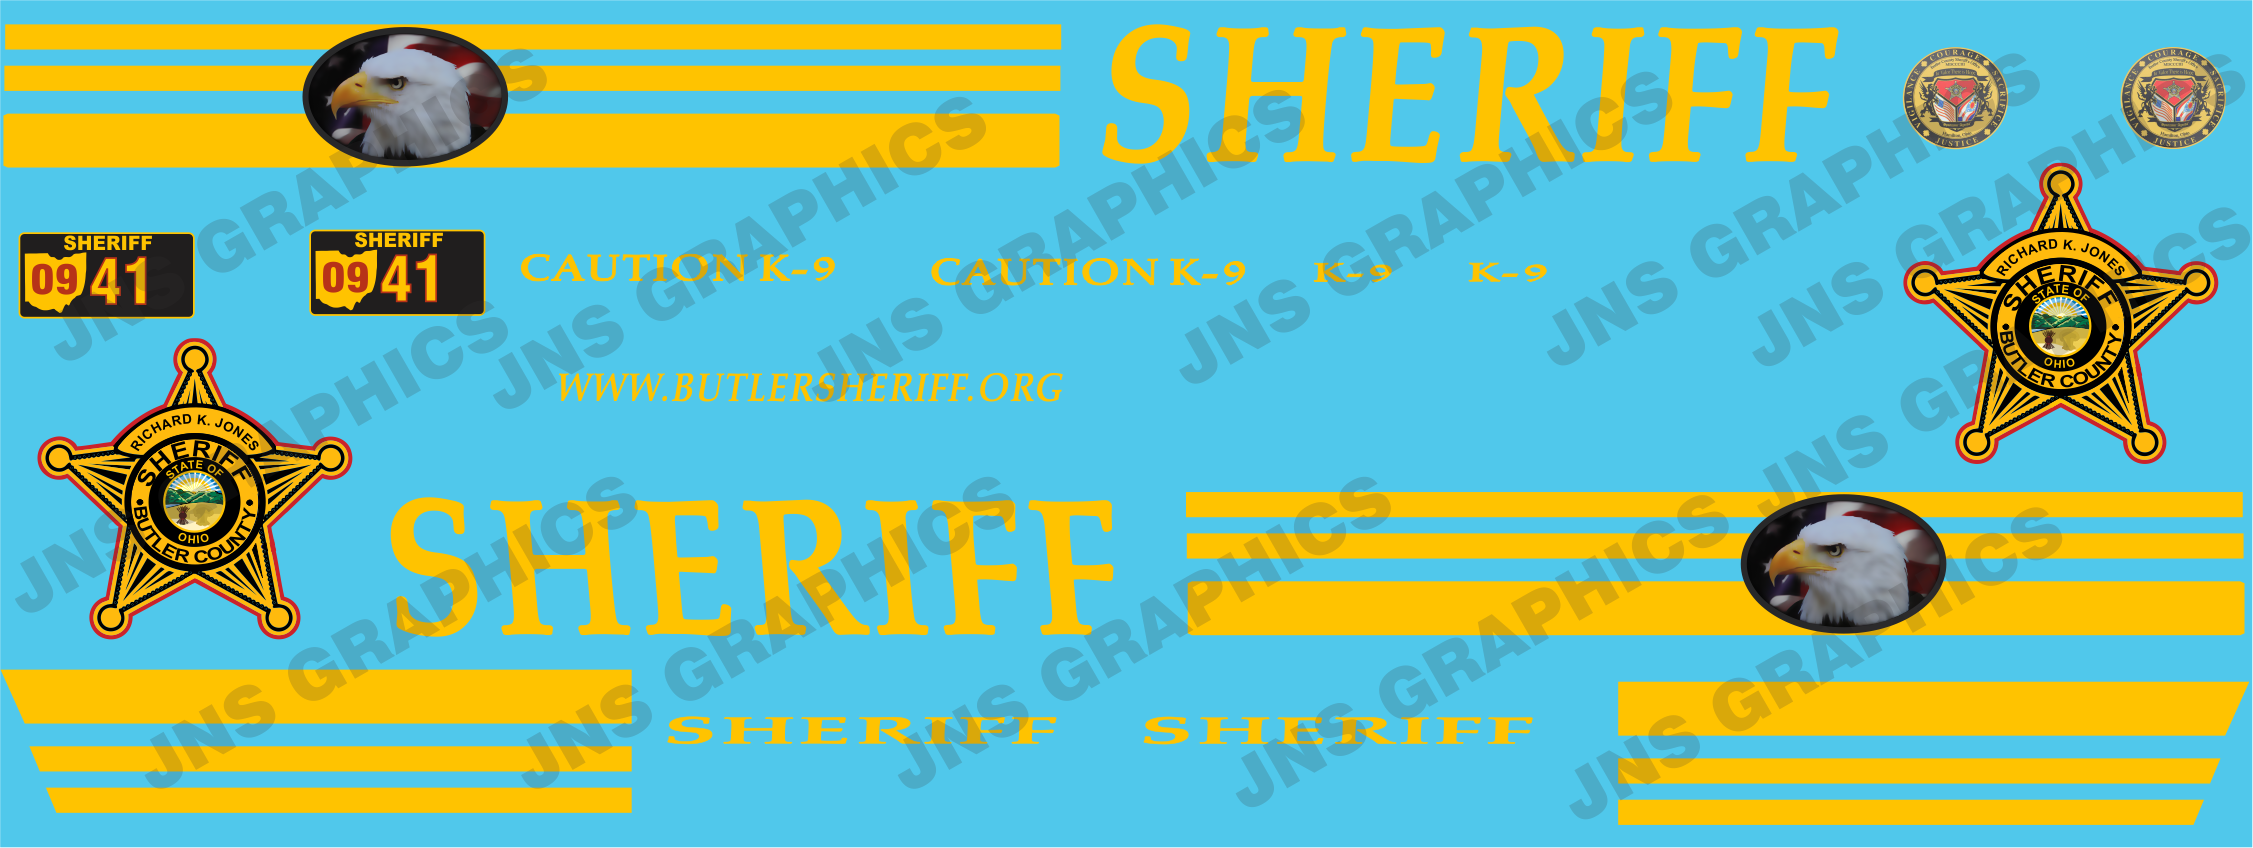 1/24 Butler County Ohio Sheriff's Department graphics